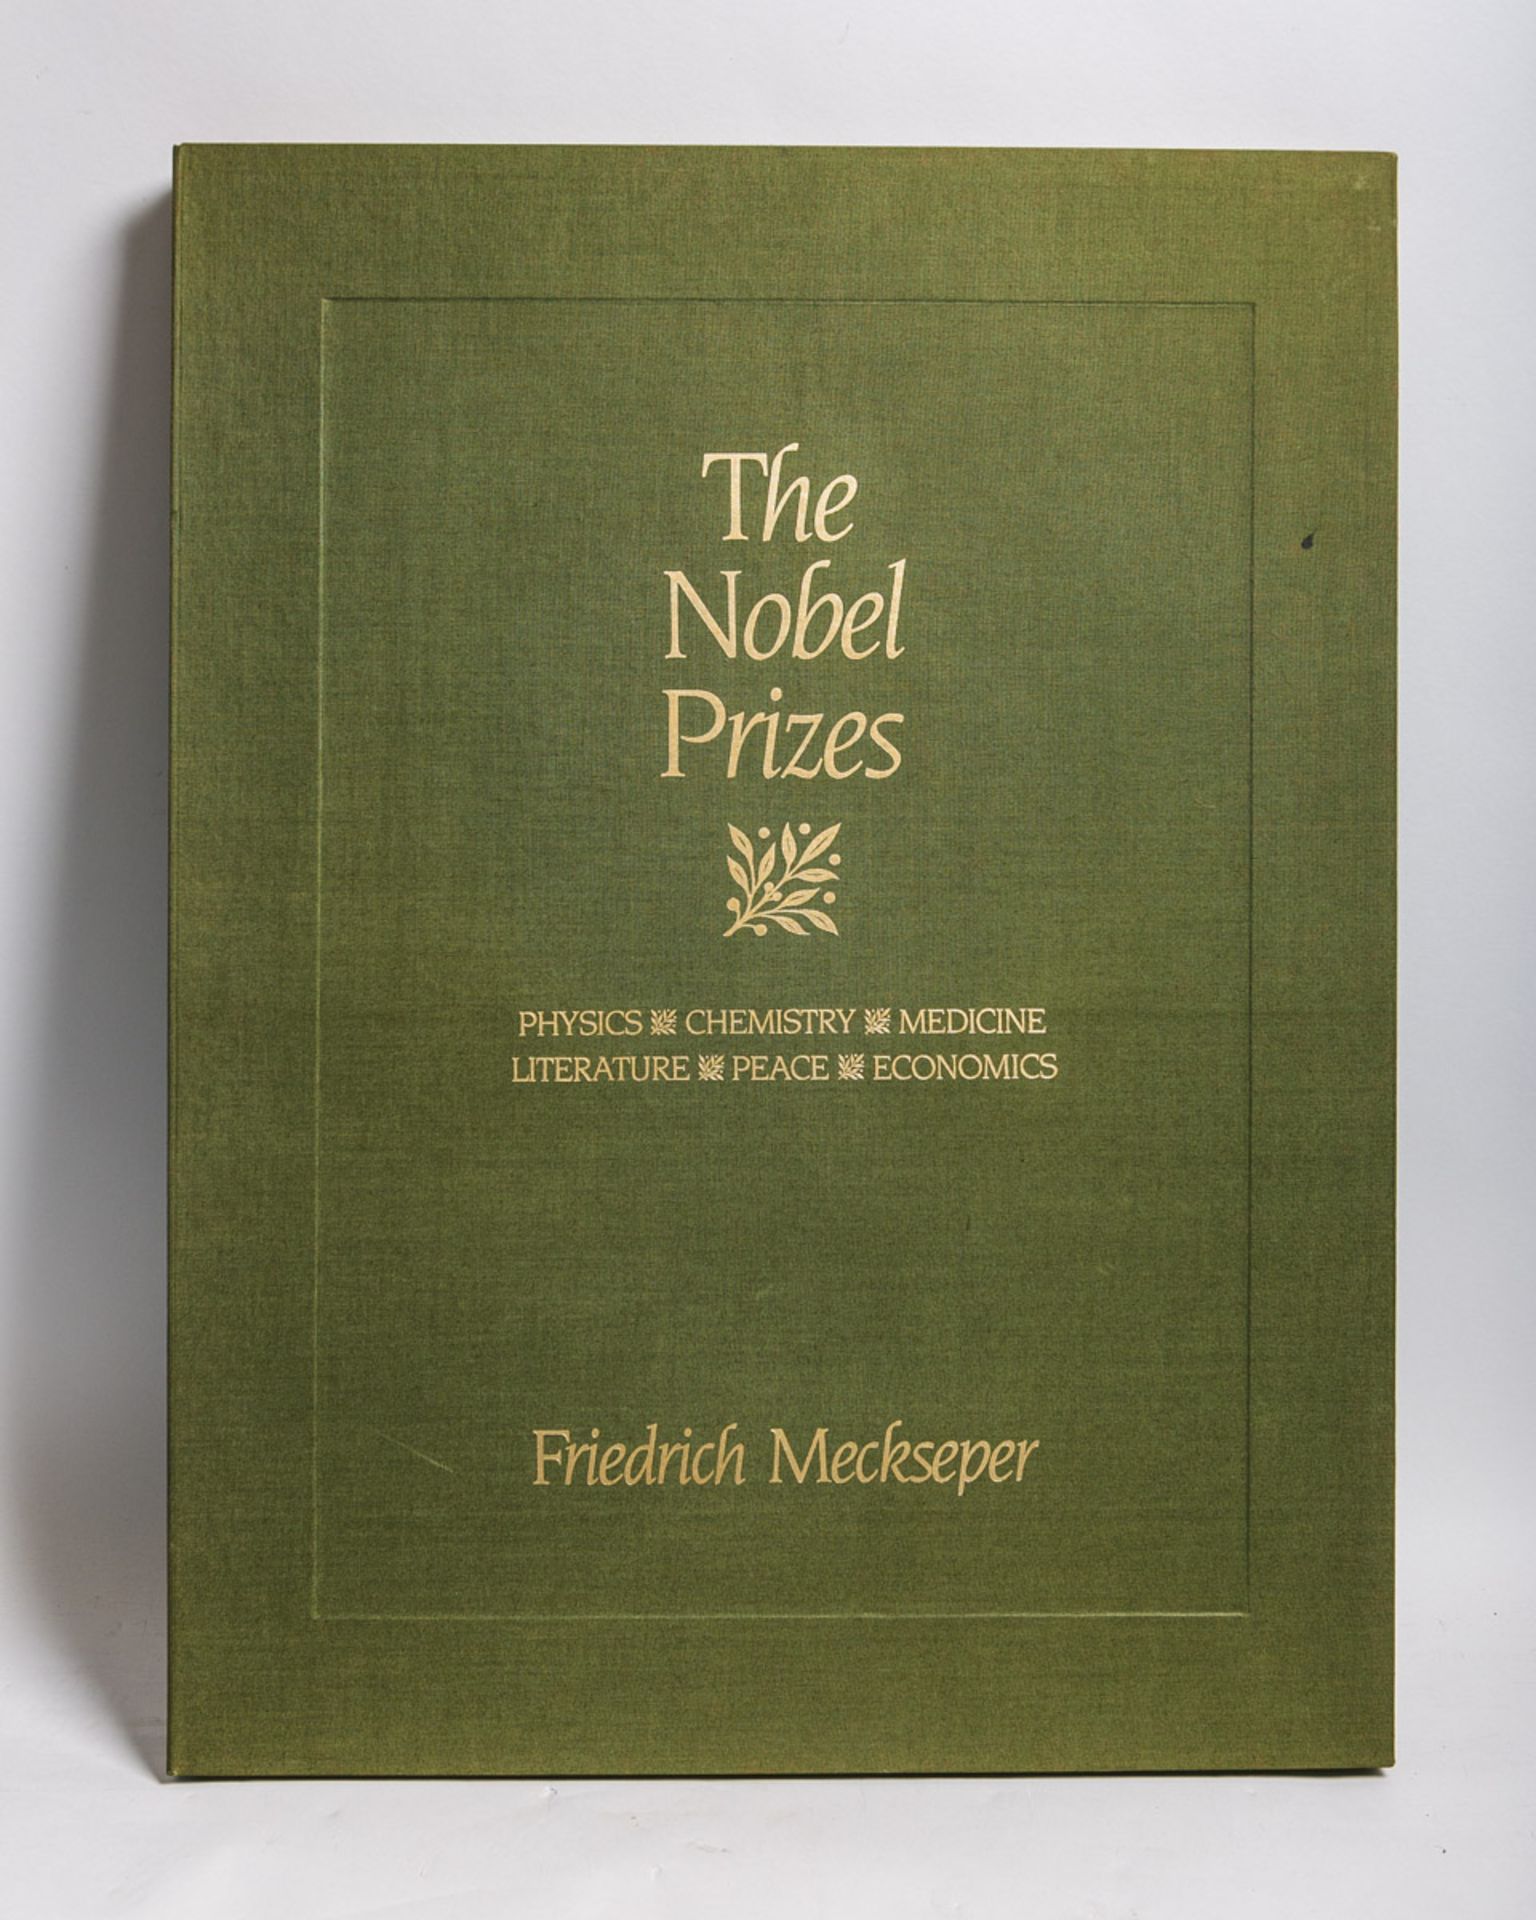 Meckseper, Friedrich (geb. 1936), "The Nobel Prizes"